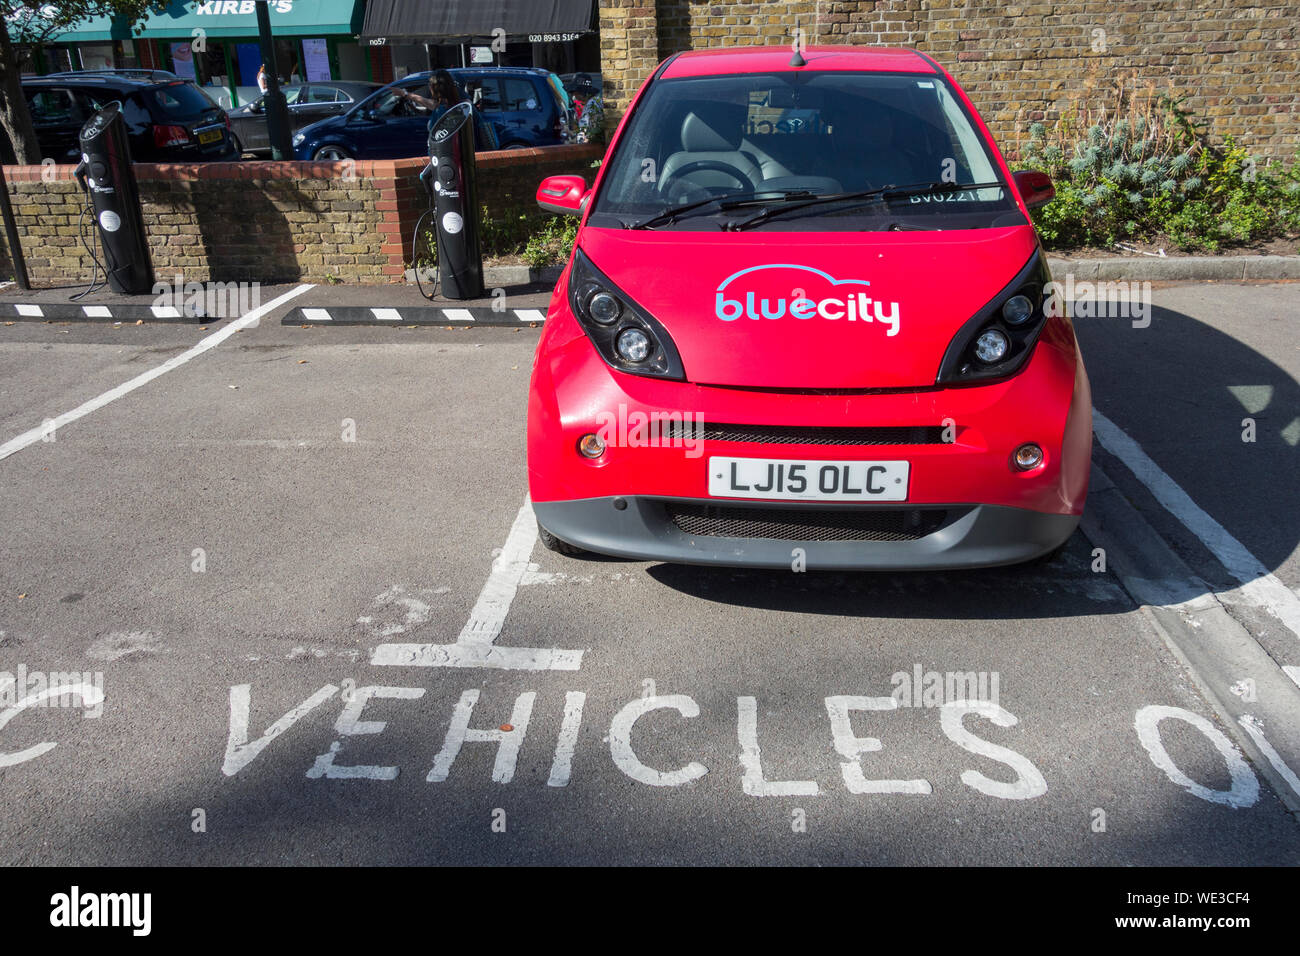 BlueCity electric car-sharing scheme in London, UK Stock Photo